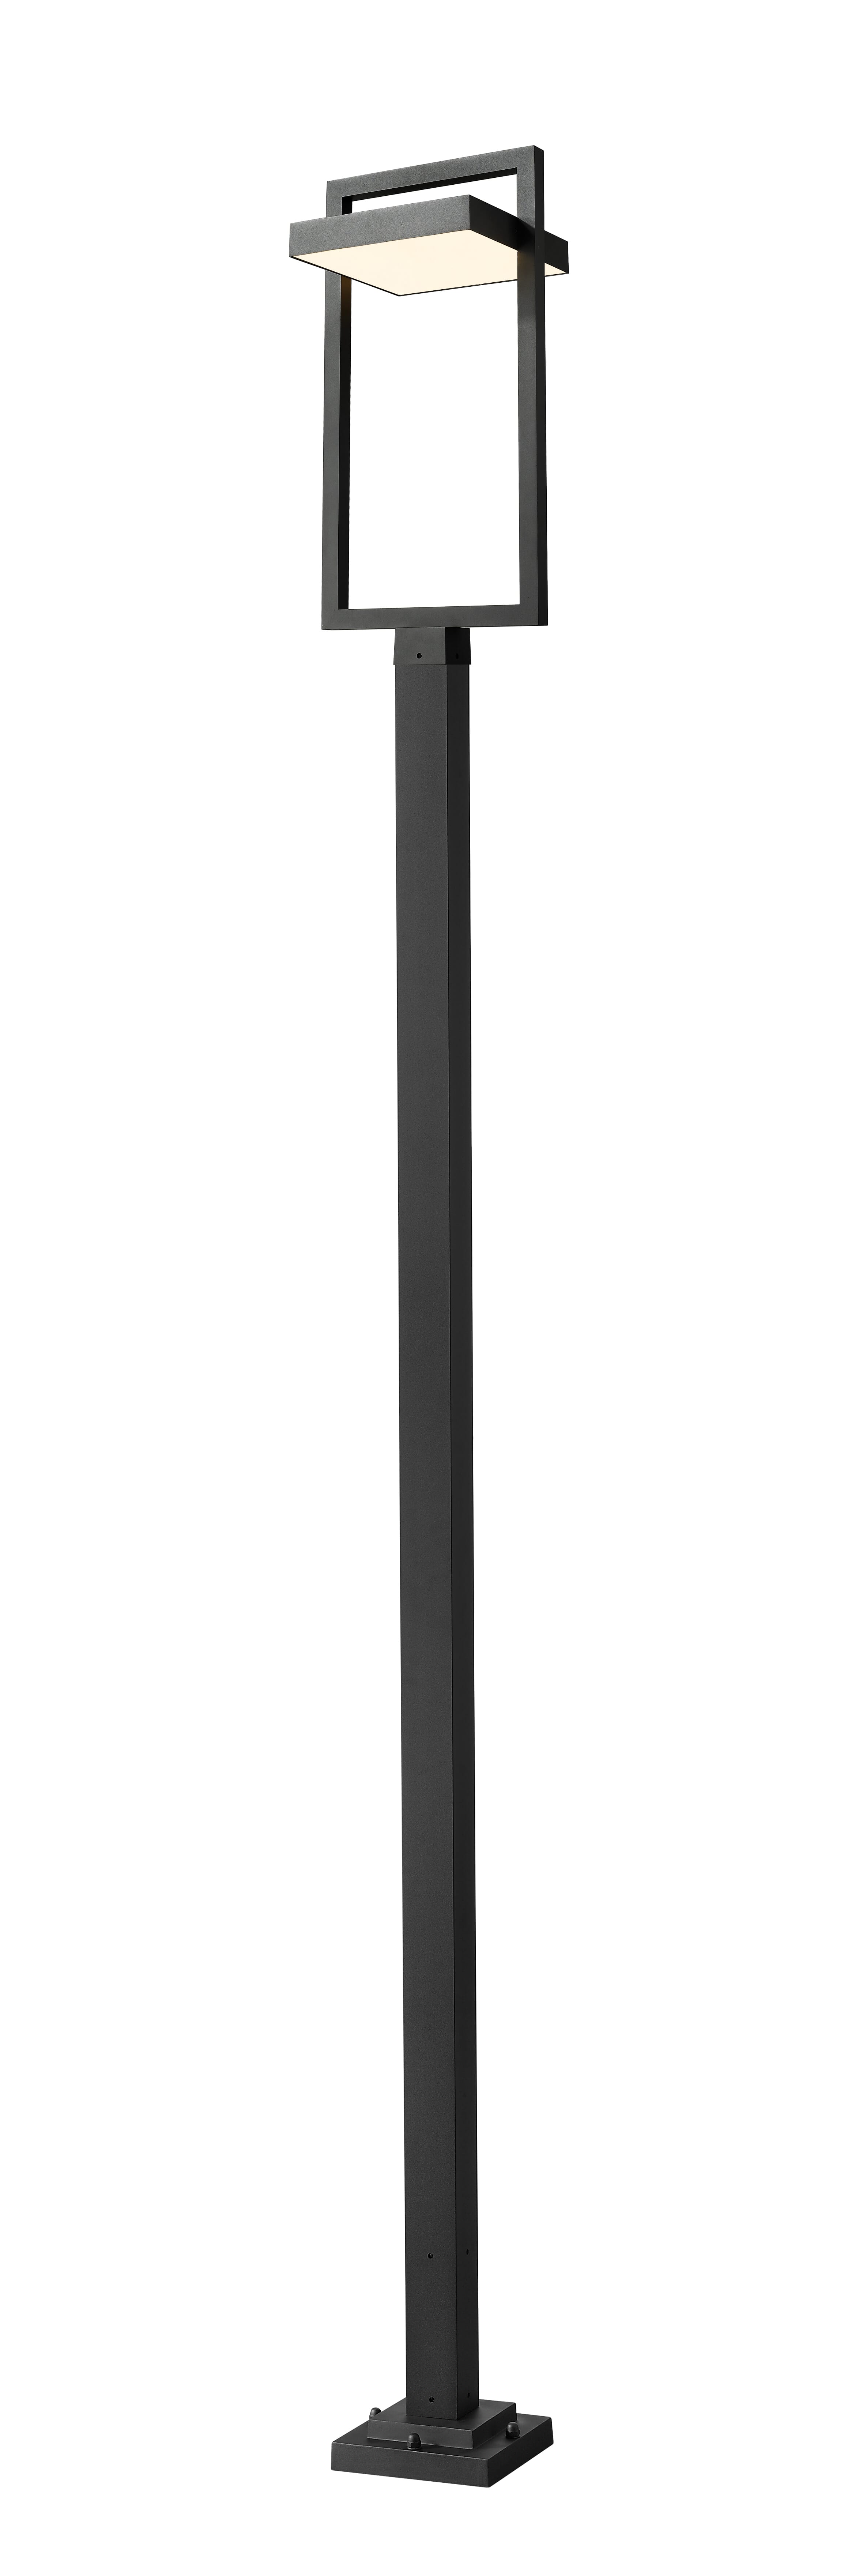 Luttrel 1-Light Outdoor Post Mounted Fixture Light In Black